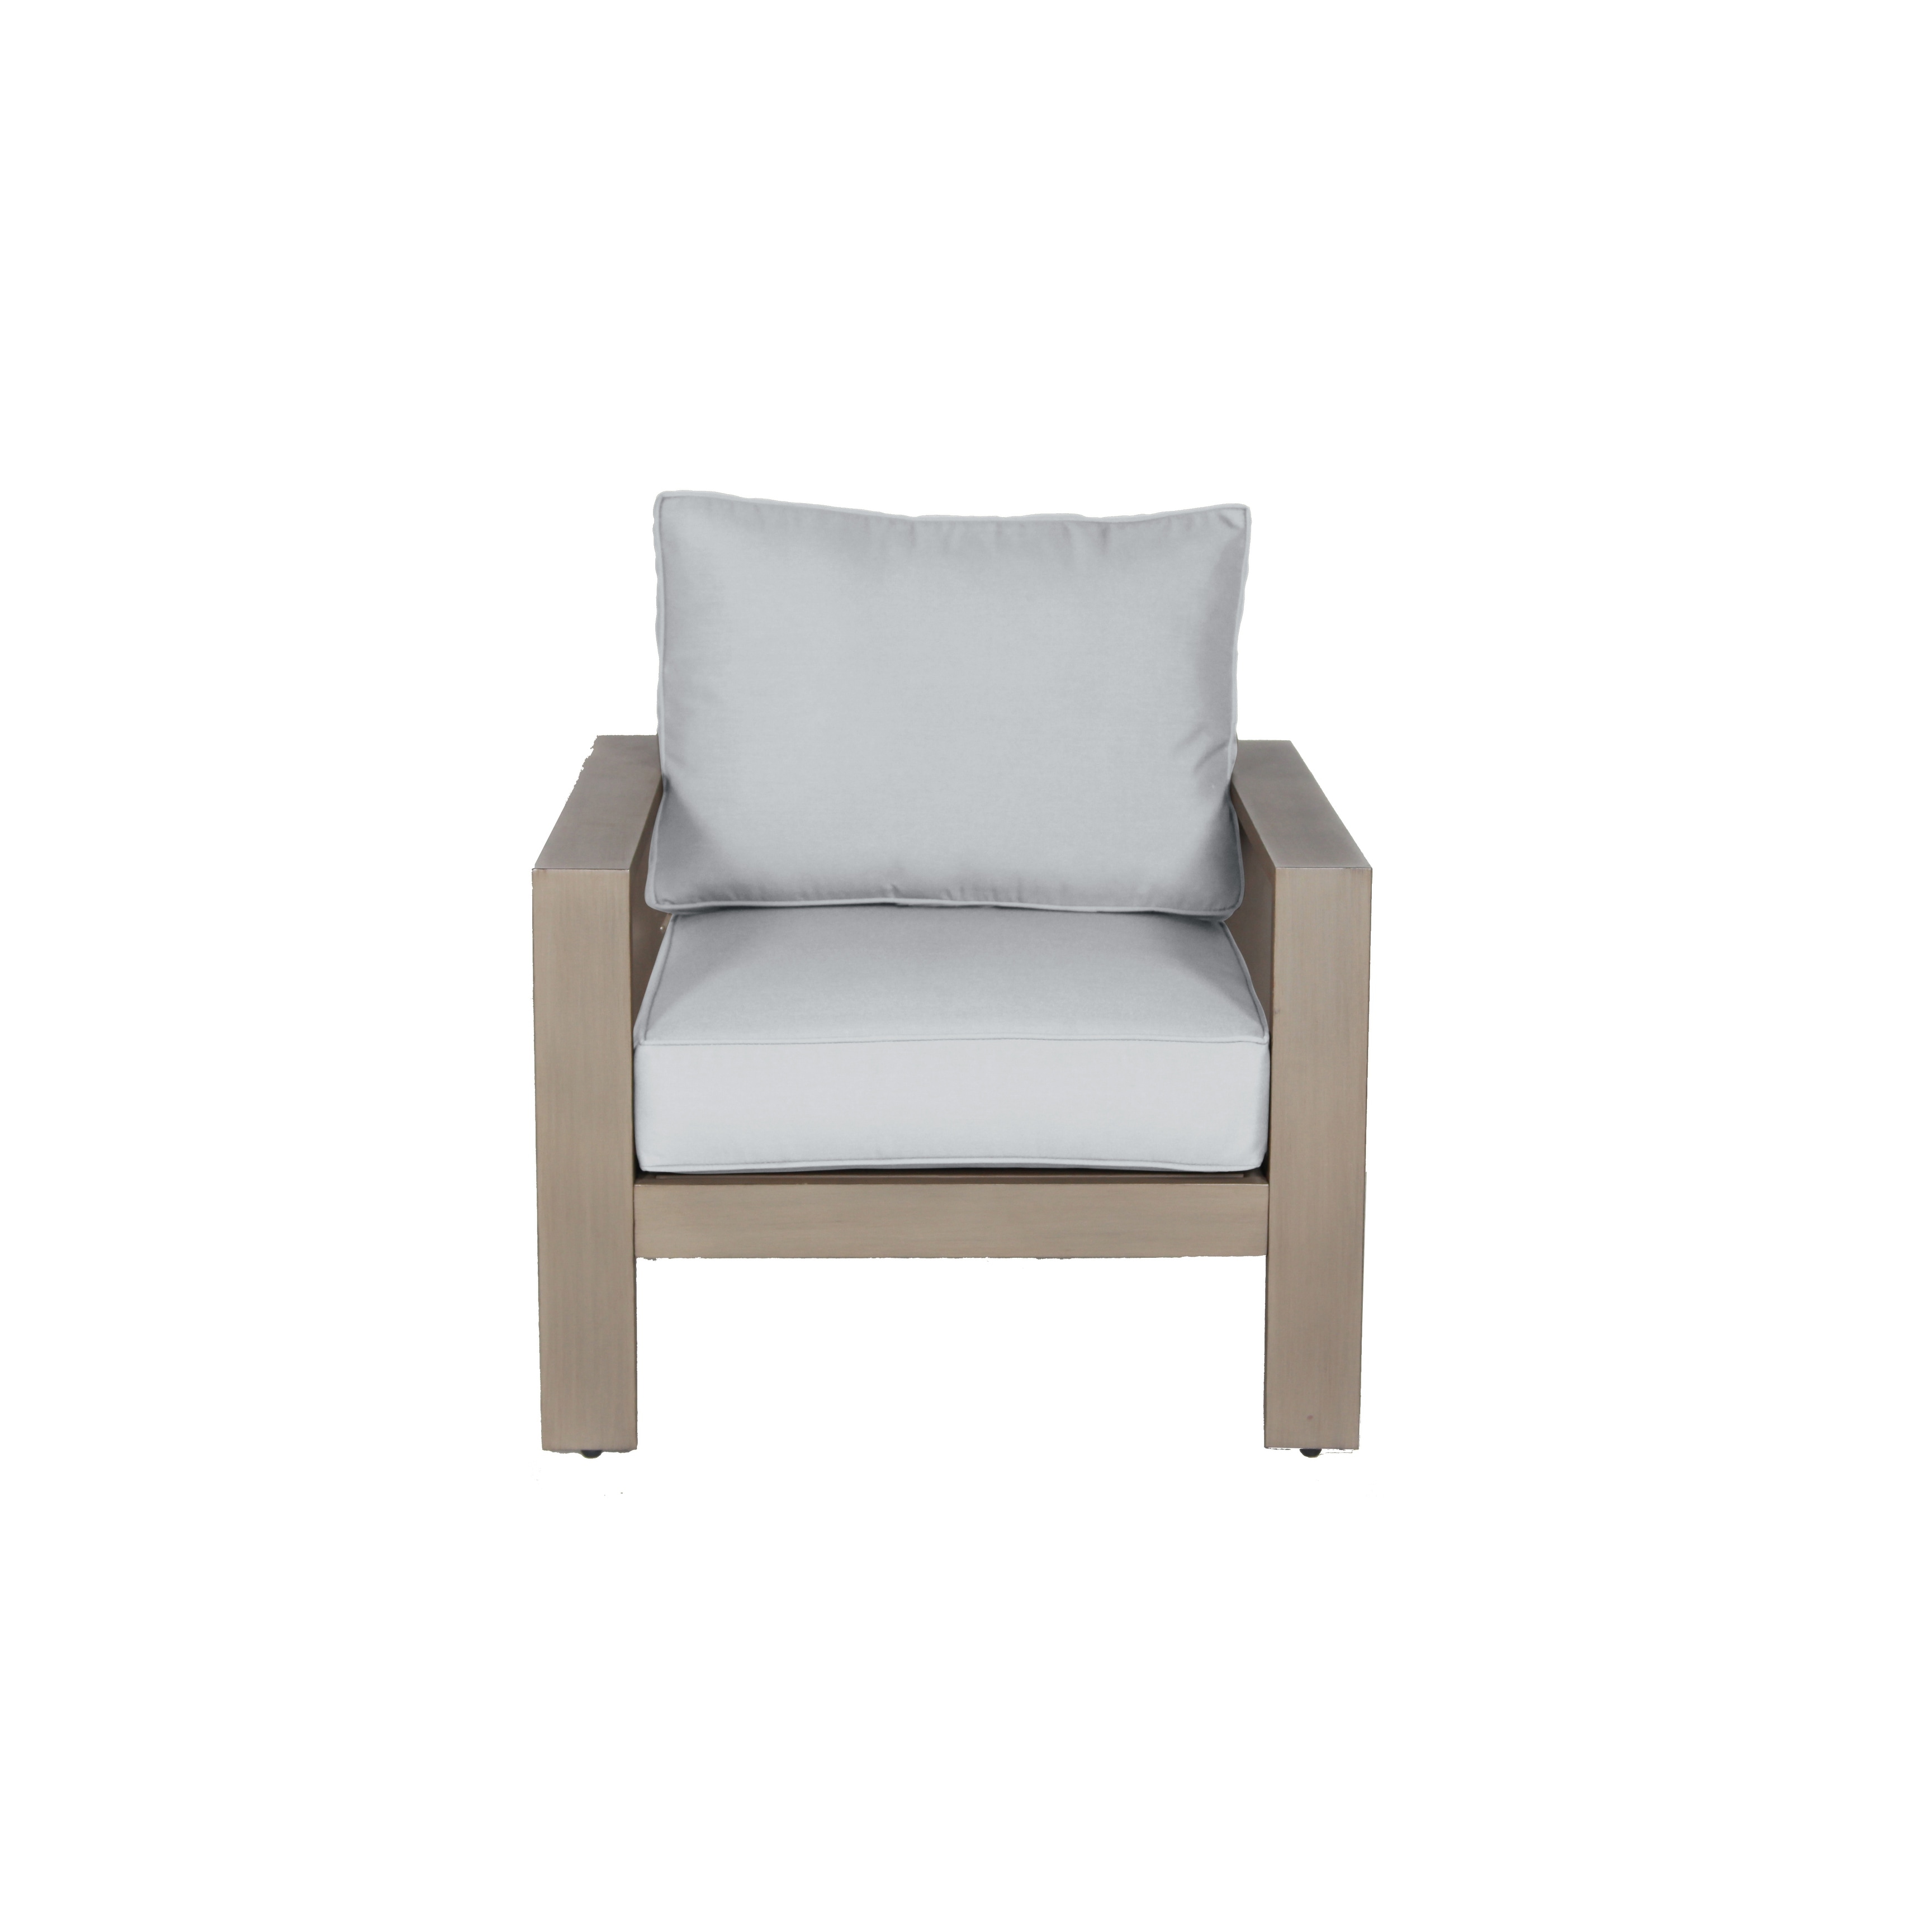 Aruba Aluminum Frame Club Chair With Cushion In Handpainted Taupe